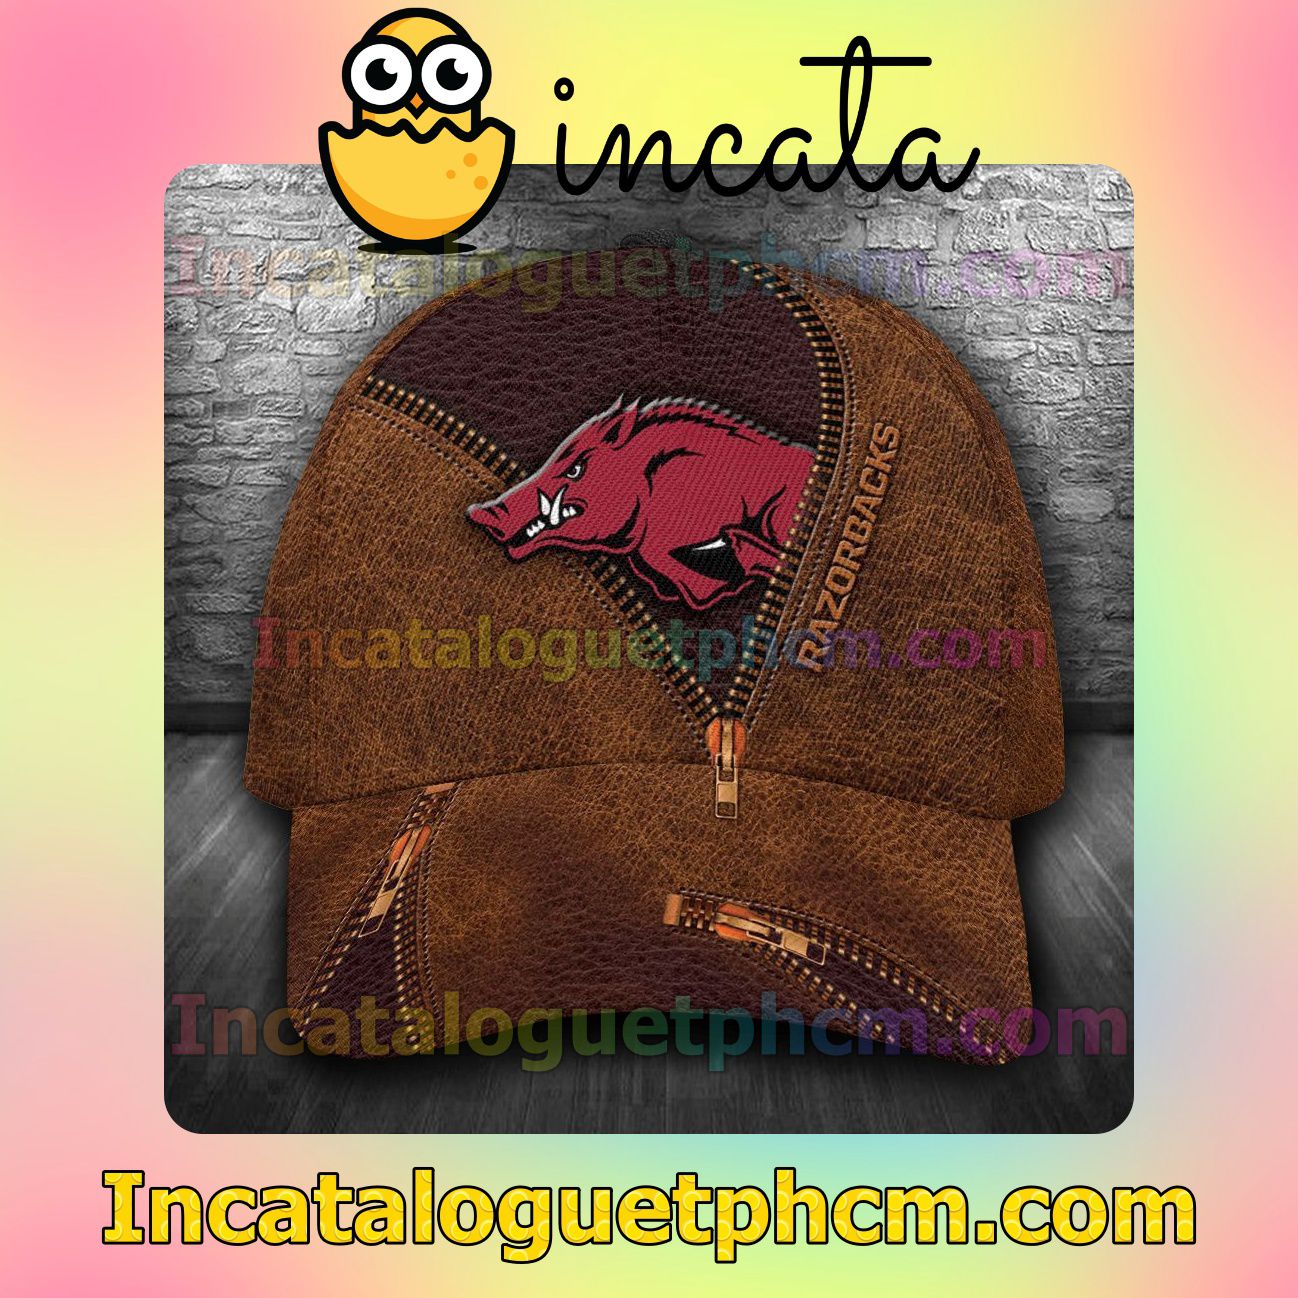 Sale Off Arkansas Razorbacks Leather Zipper Print Customized Hat Caps